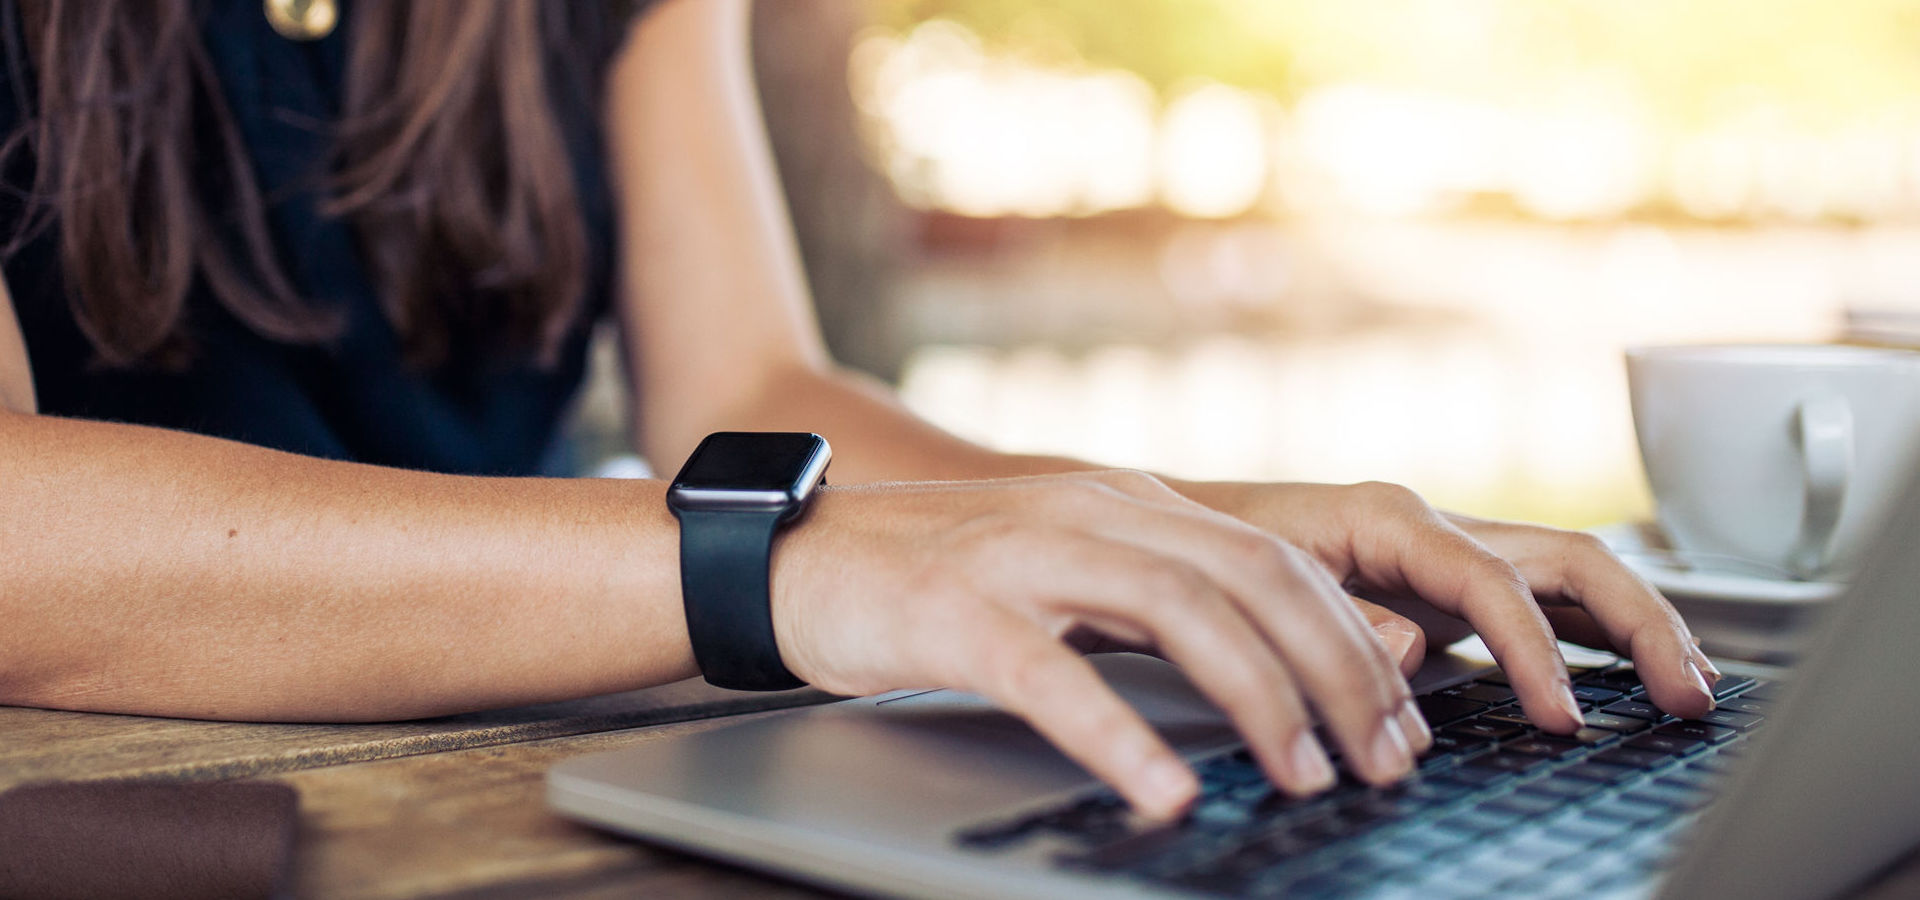 Woman wearing smartwatch using laptop computer.